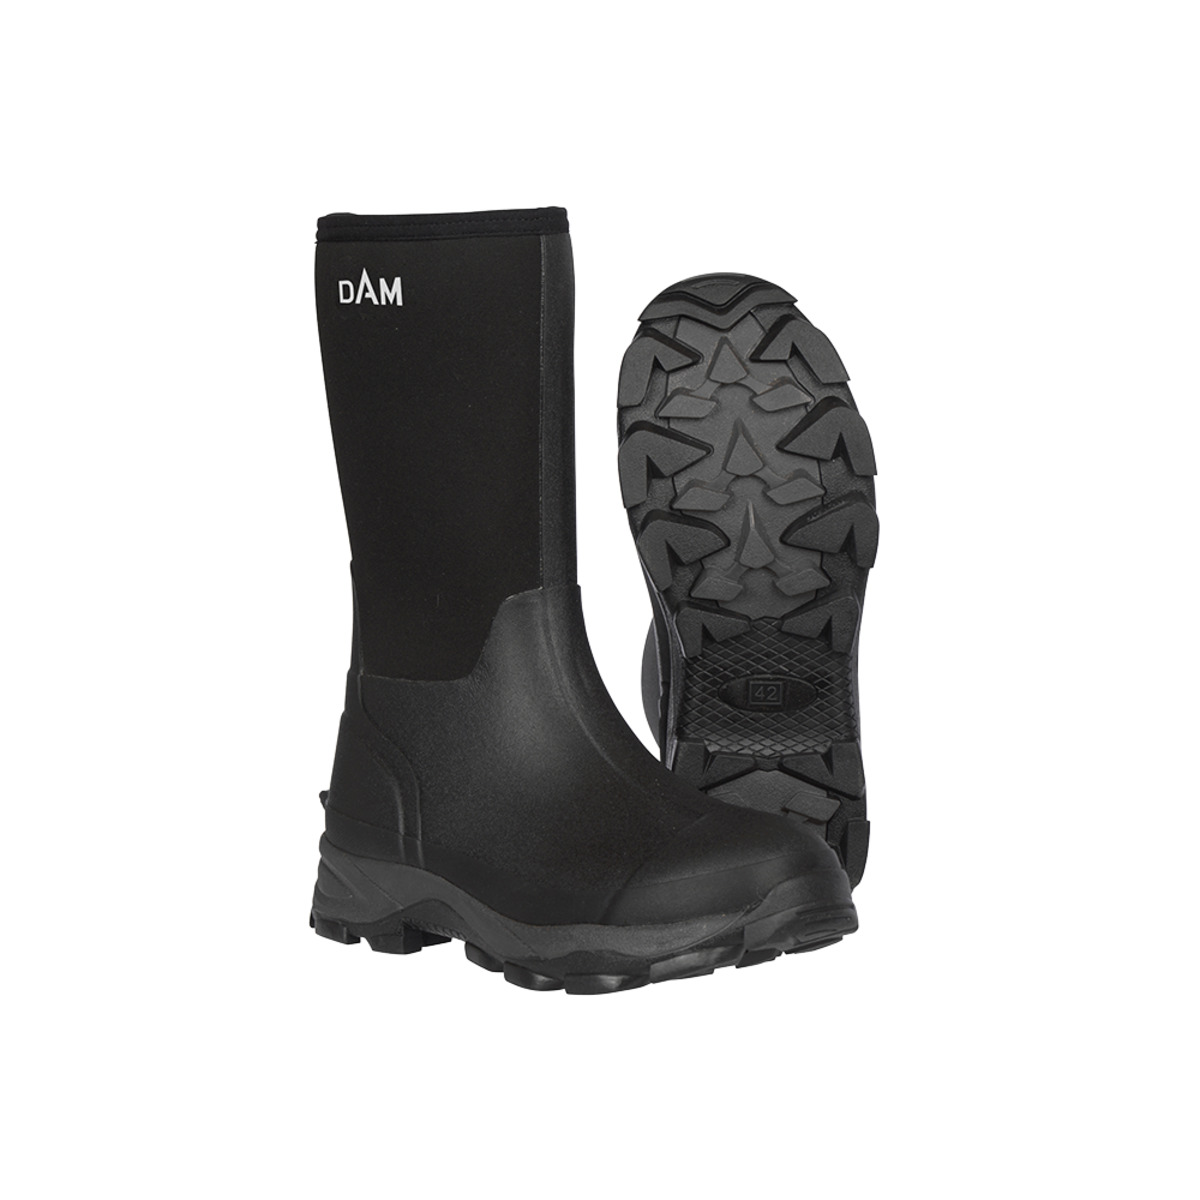 Dam Tira Boots Rubber/neoprene - 42/7.5 BLACK